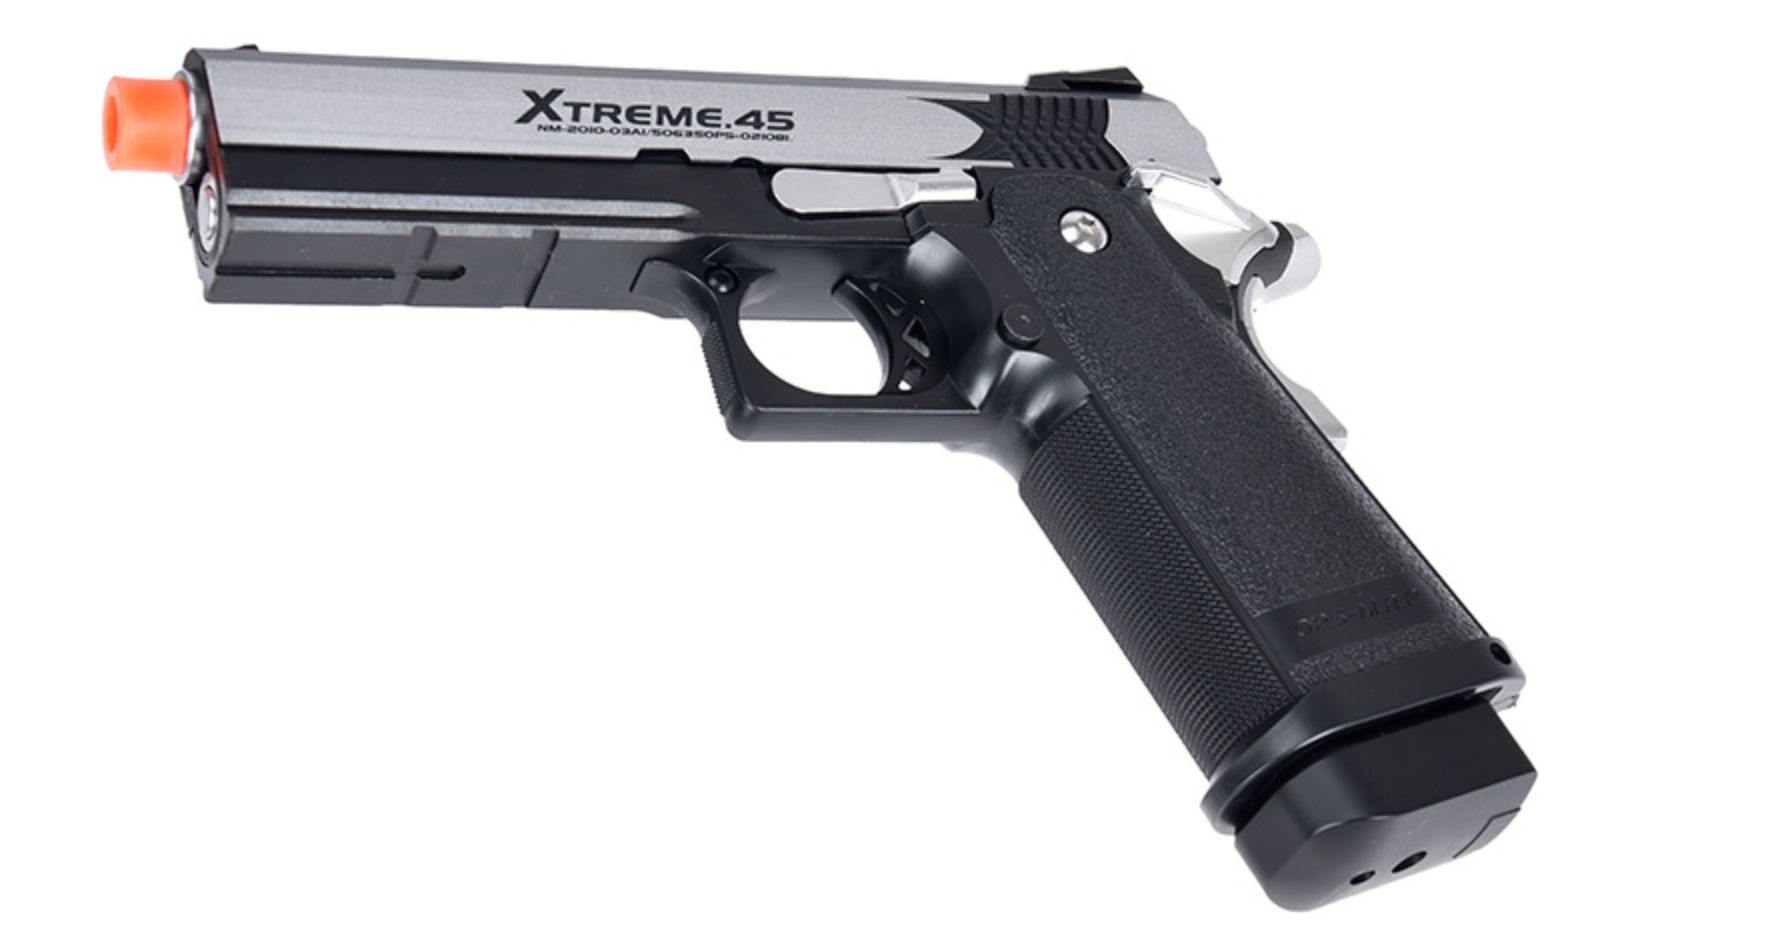 Tokyo Marui Hi-Capa Xtreme .45 Full Automatic GBB Pistol